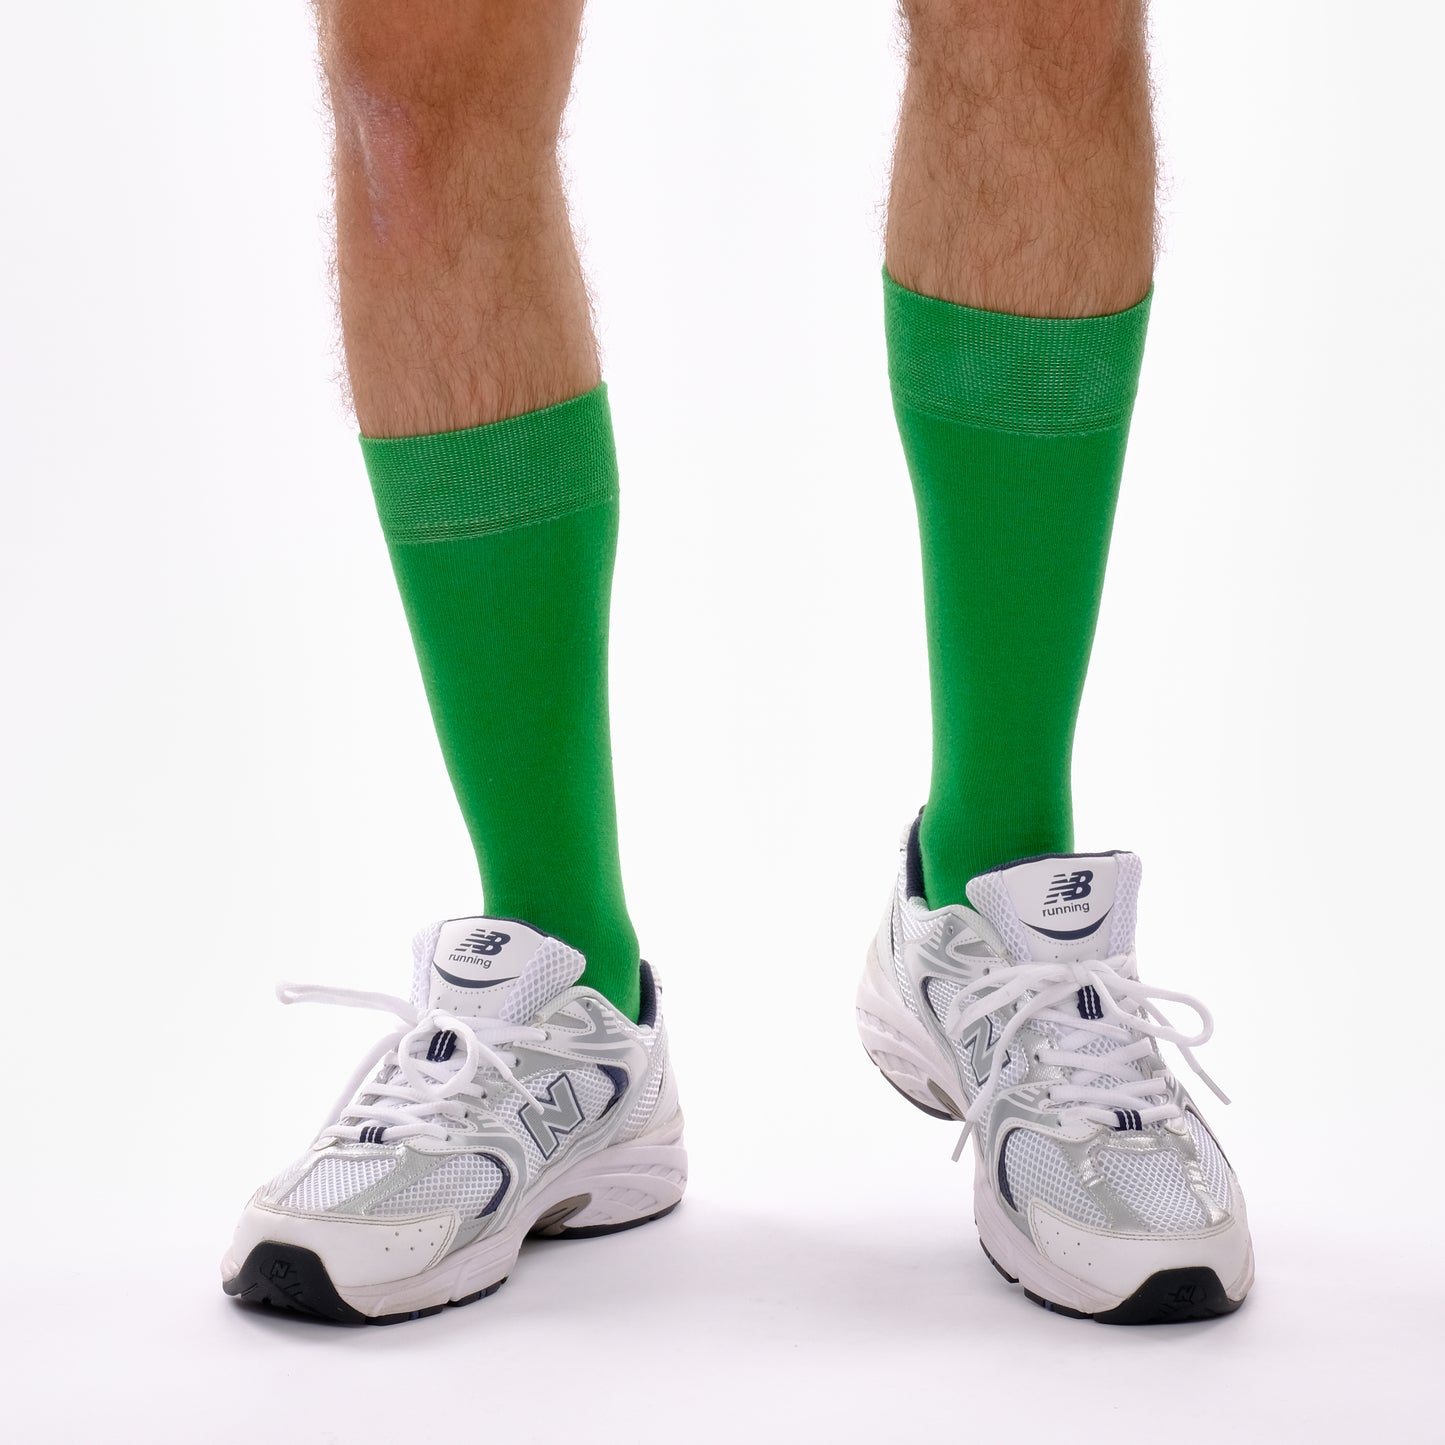 Twin Green Socks